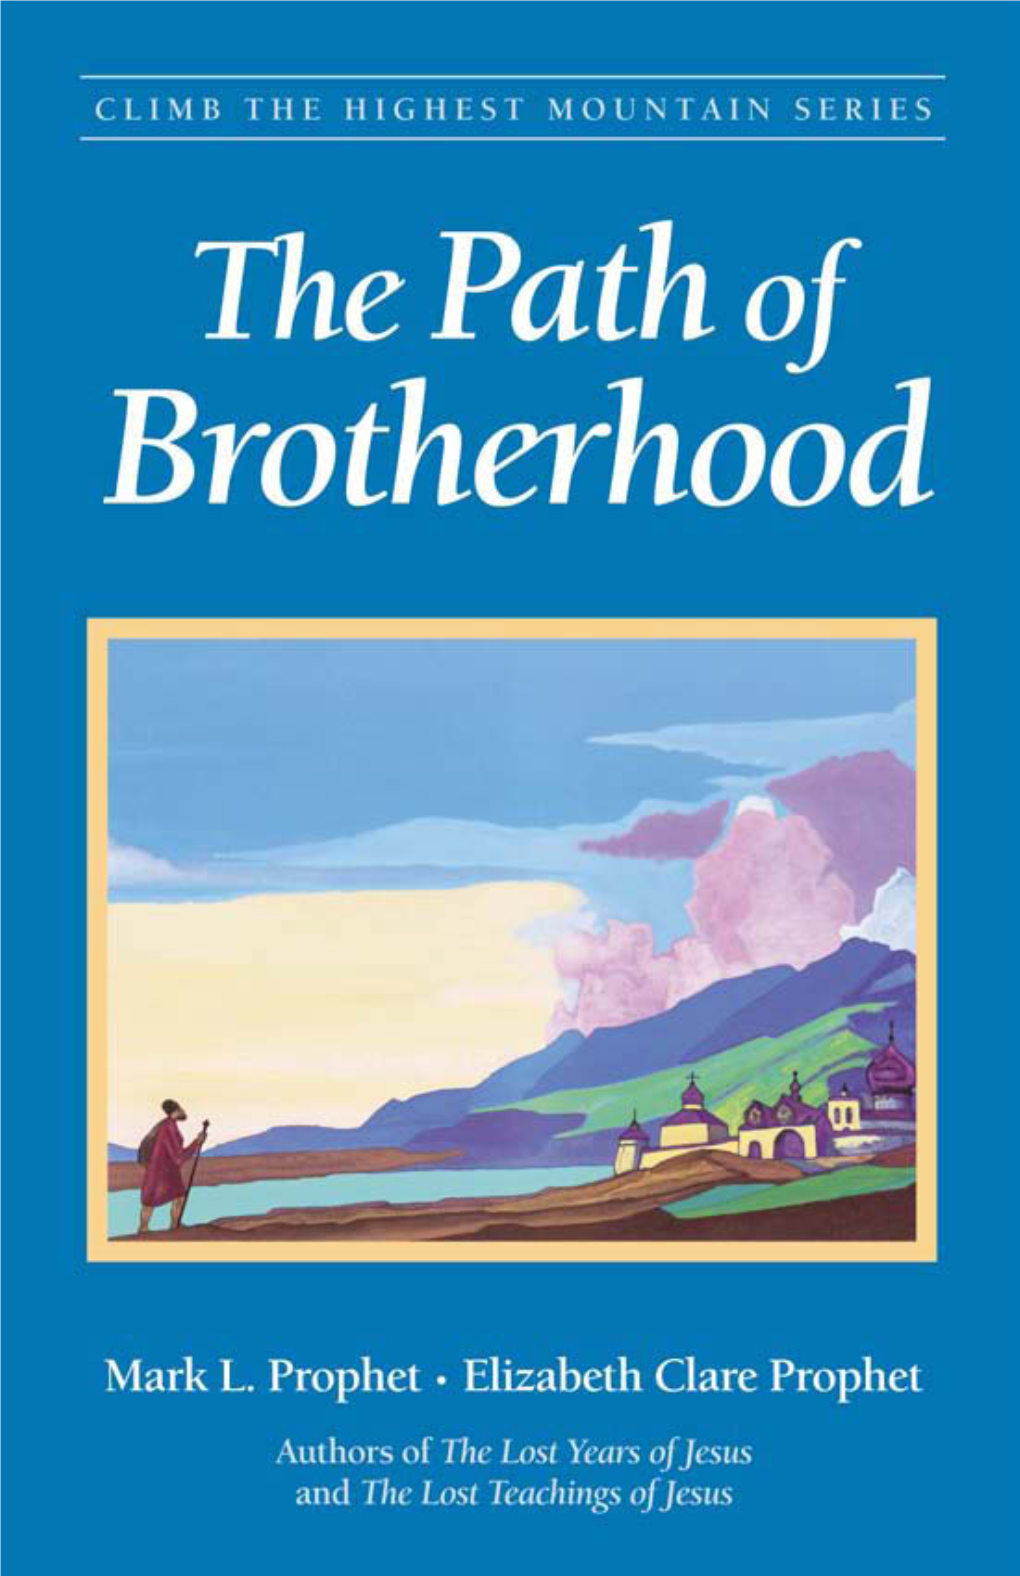 The Path of Brotherhood CLIMB the HIGHEST MOUNTAIN® SERIES